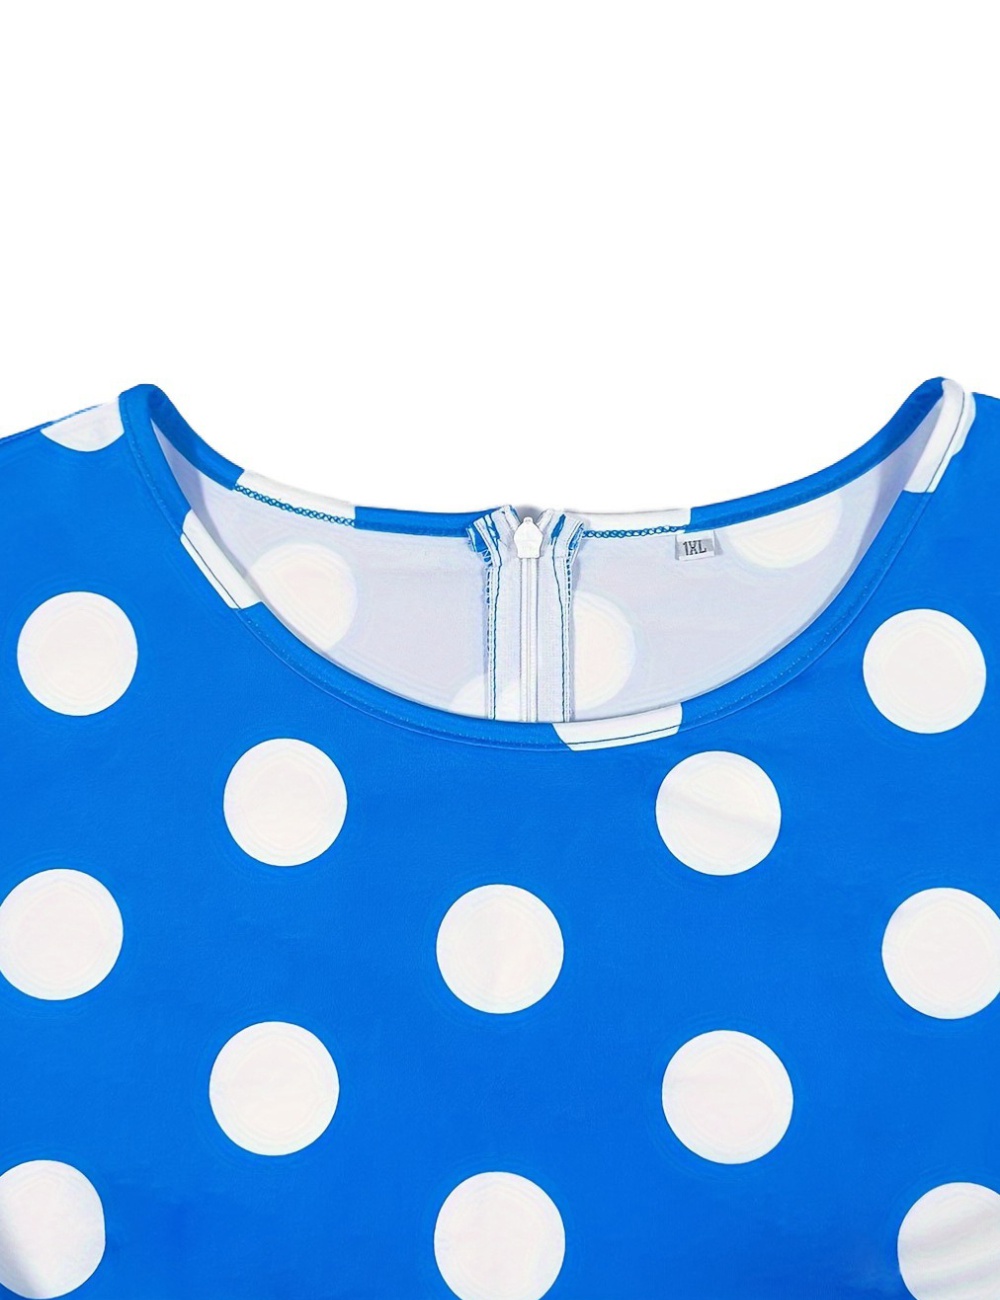 Round neck polka dot bandage retro dress for women